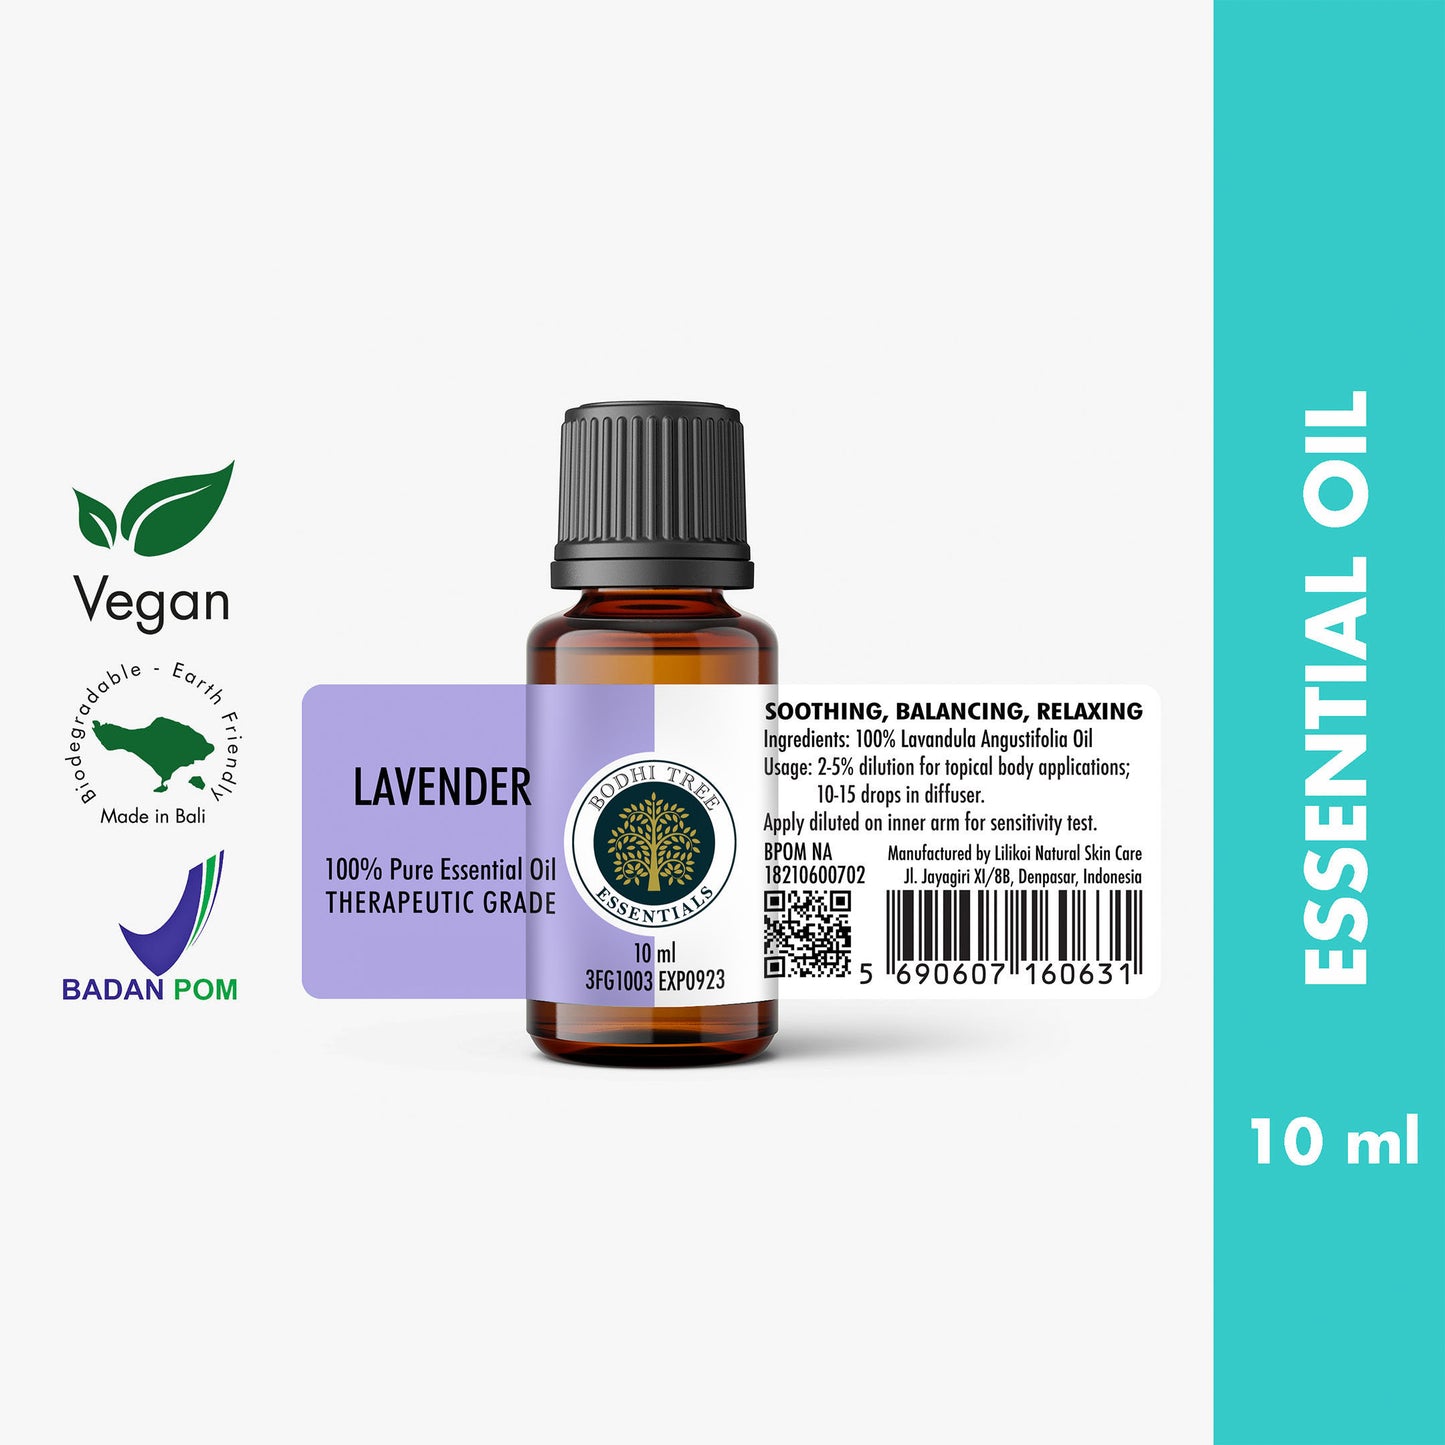 Bodhi Tree 100% Pure Essential oil - Lavender